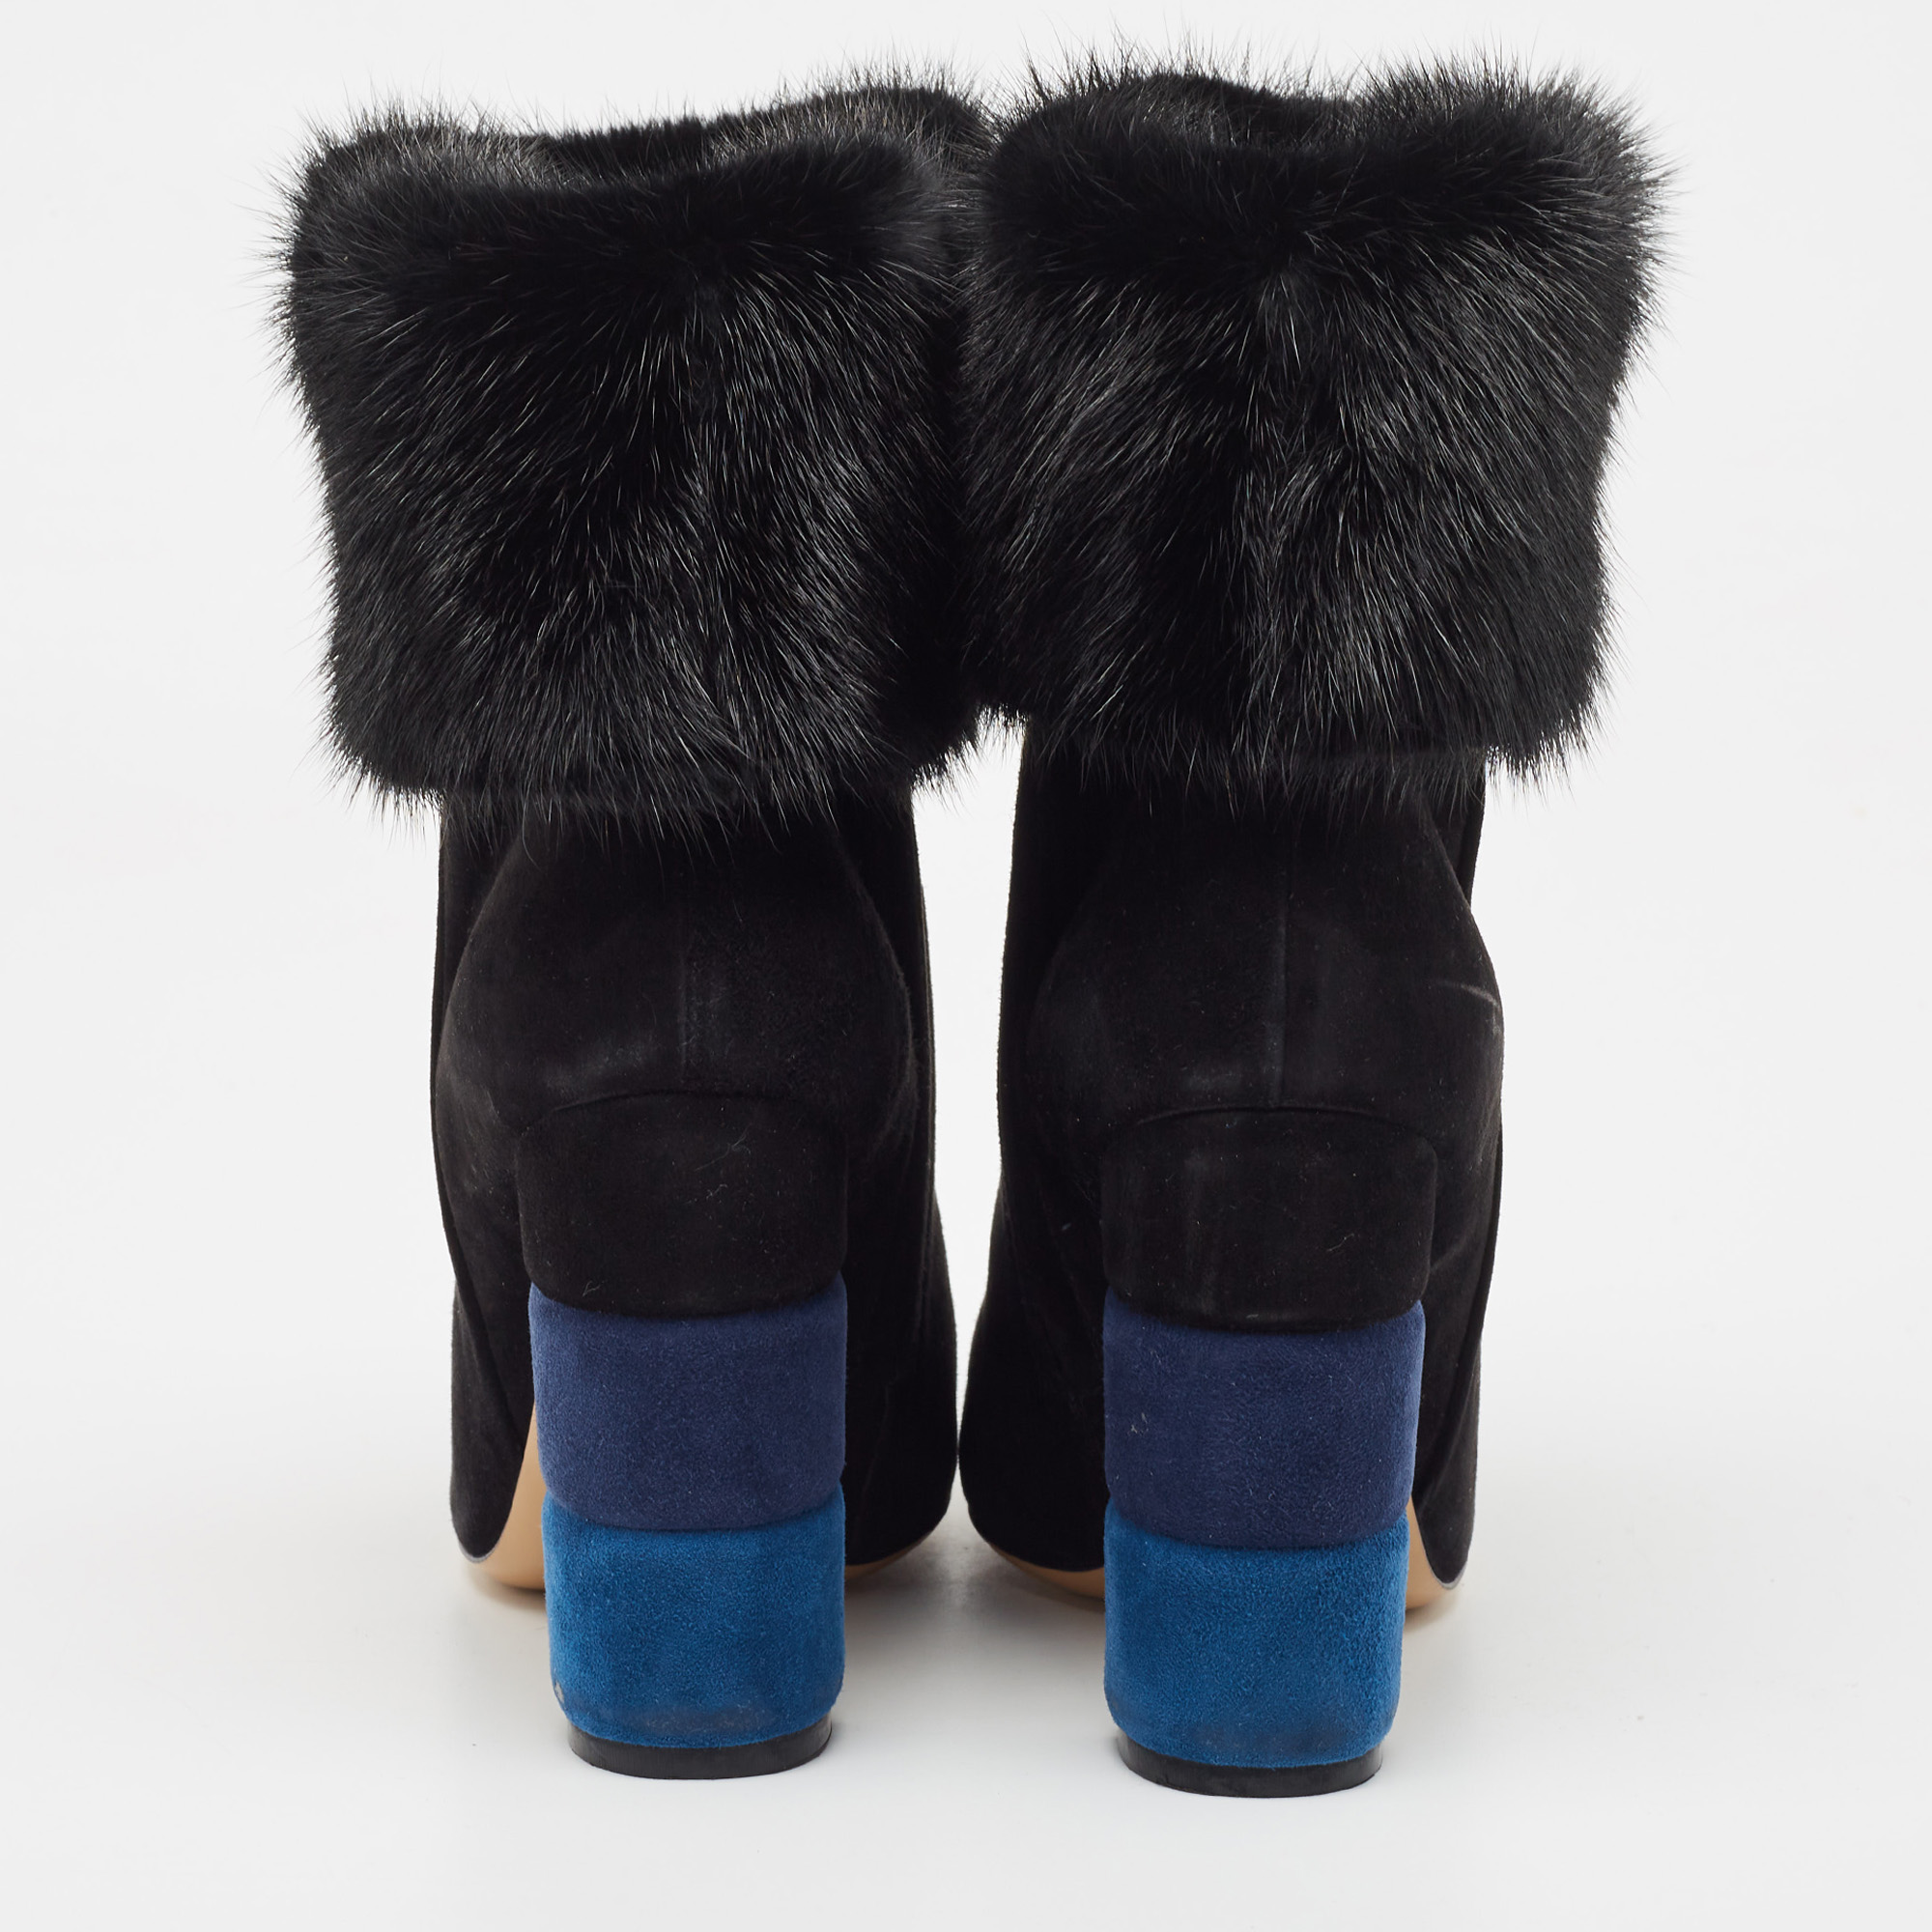 Salvatore Ferragamo Black Suede And Fur Loris Ankle Boots Size 37.5